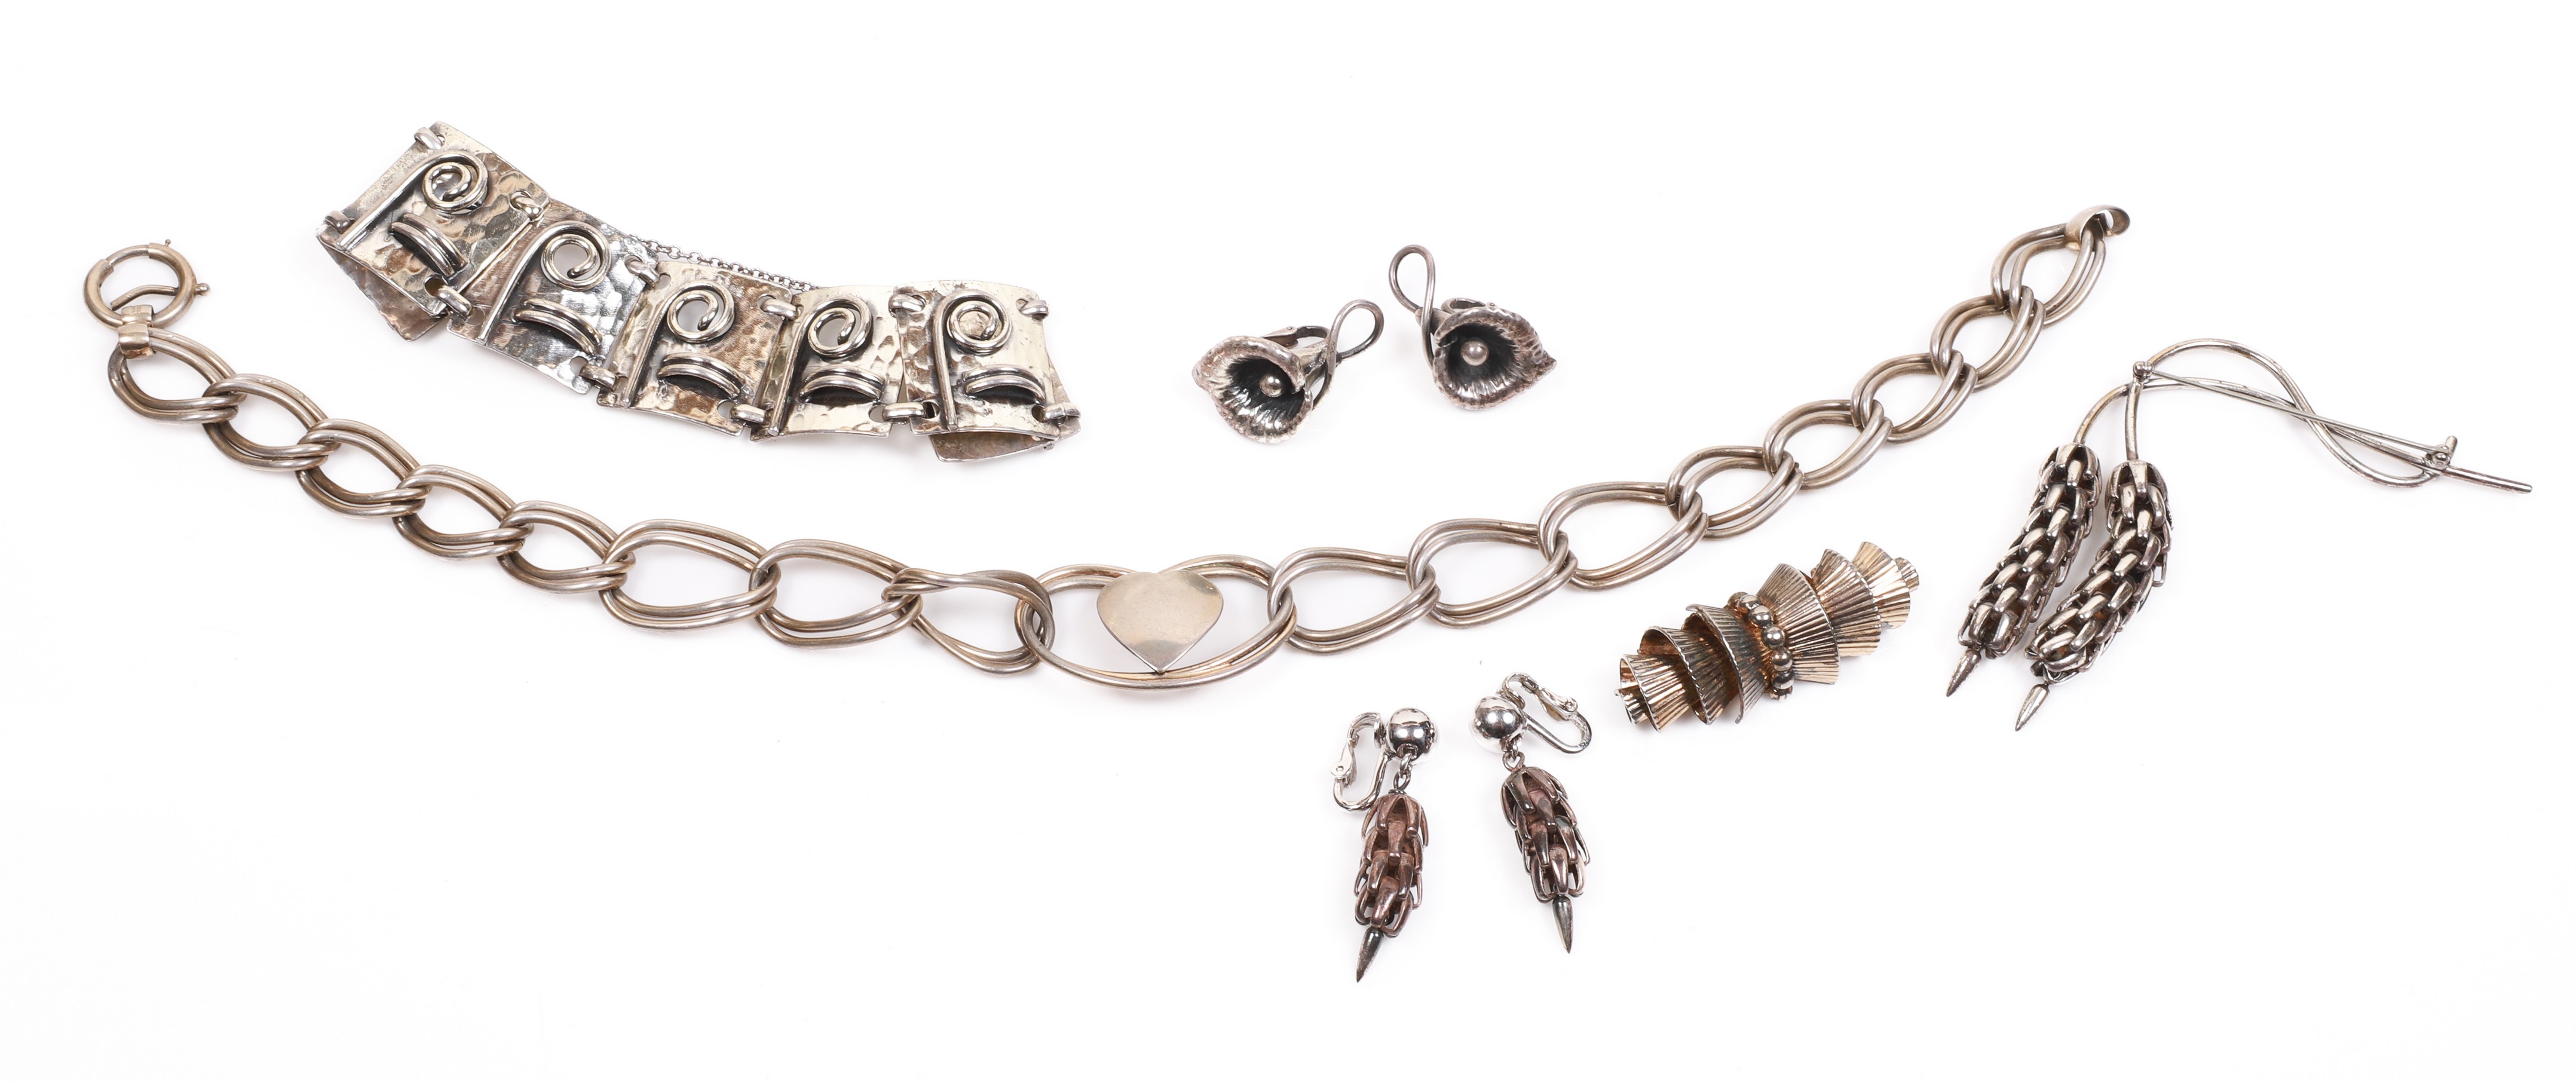 Napier designer jewelry to include 3b4d7b